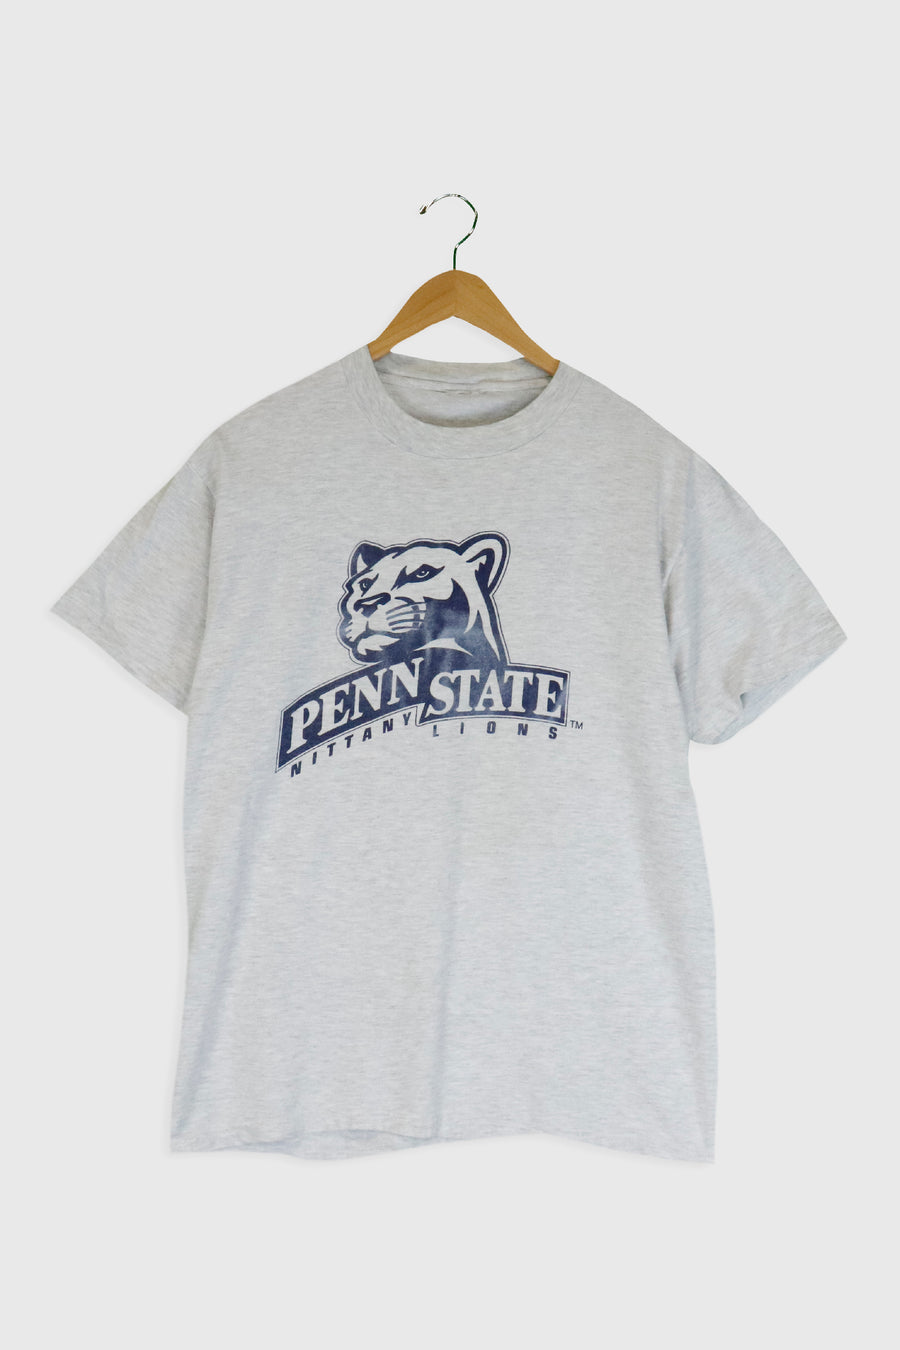 Vintage Penn State Nittany Lions Team T Shirt